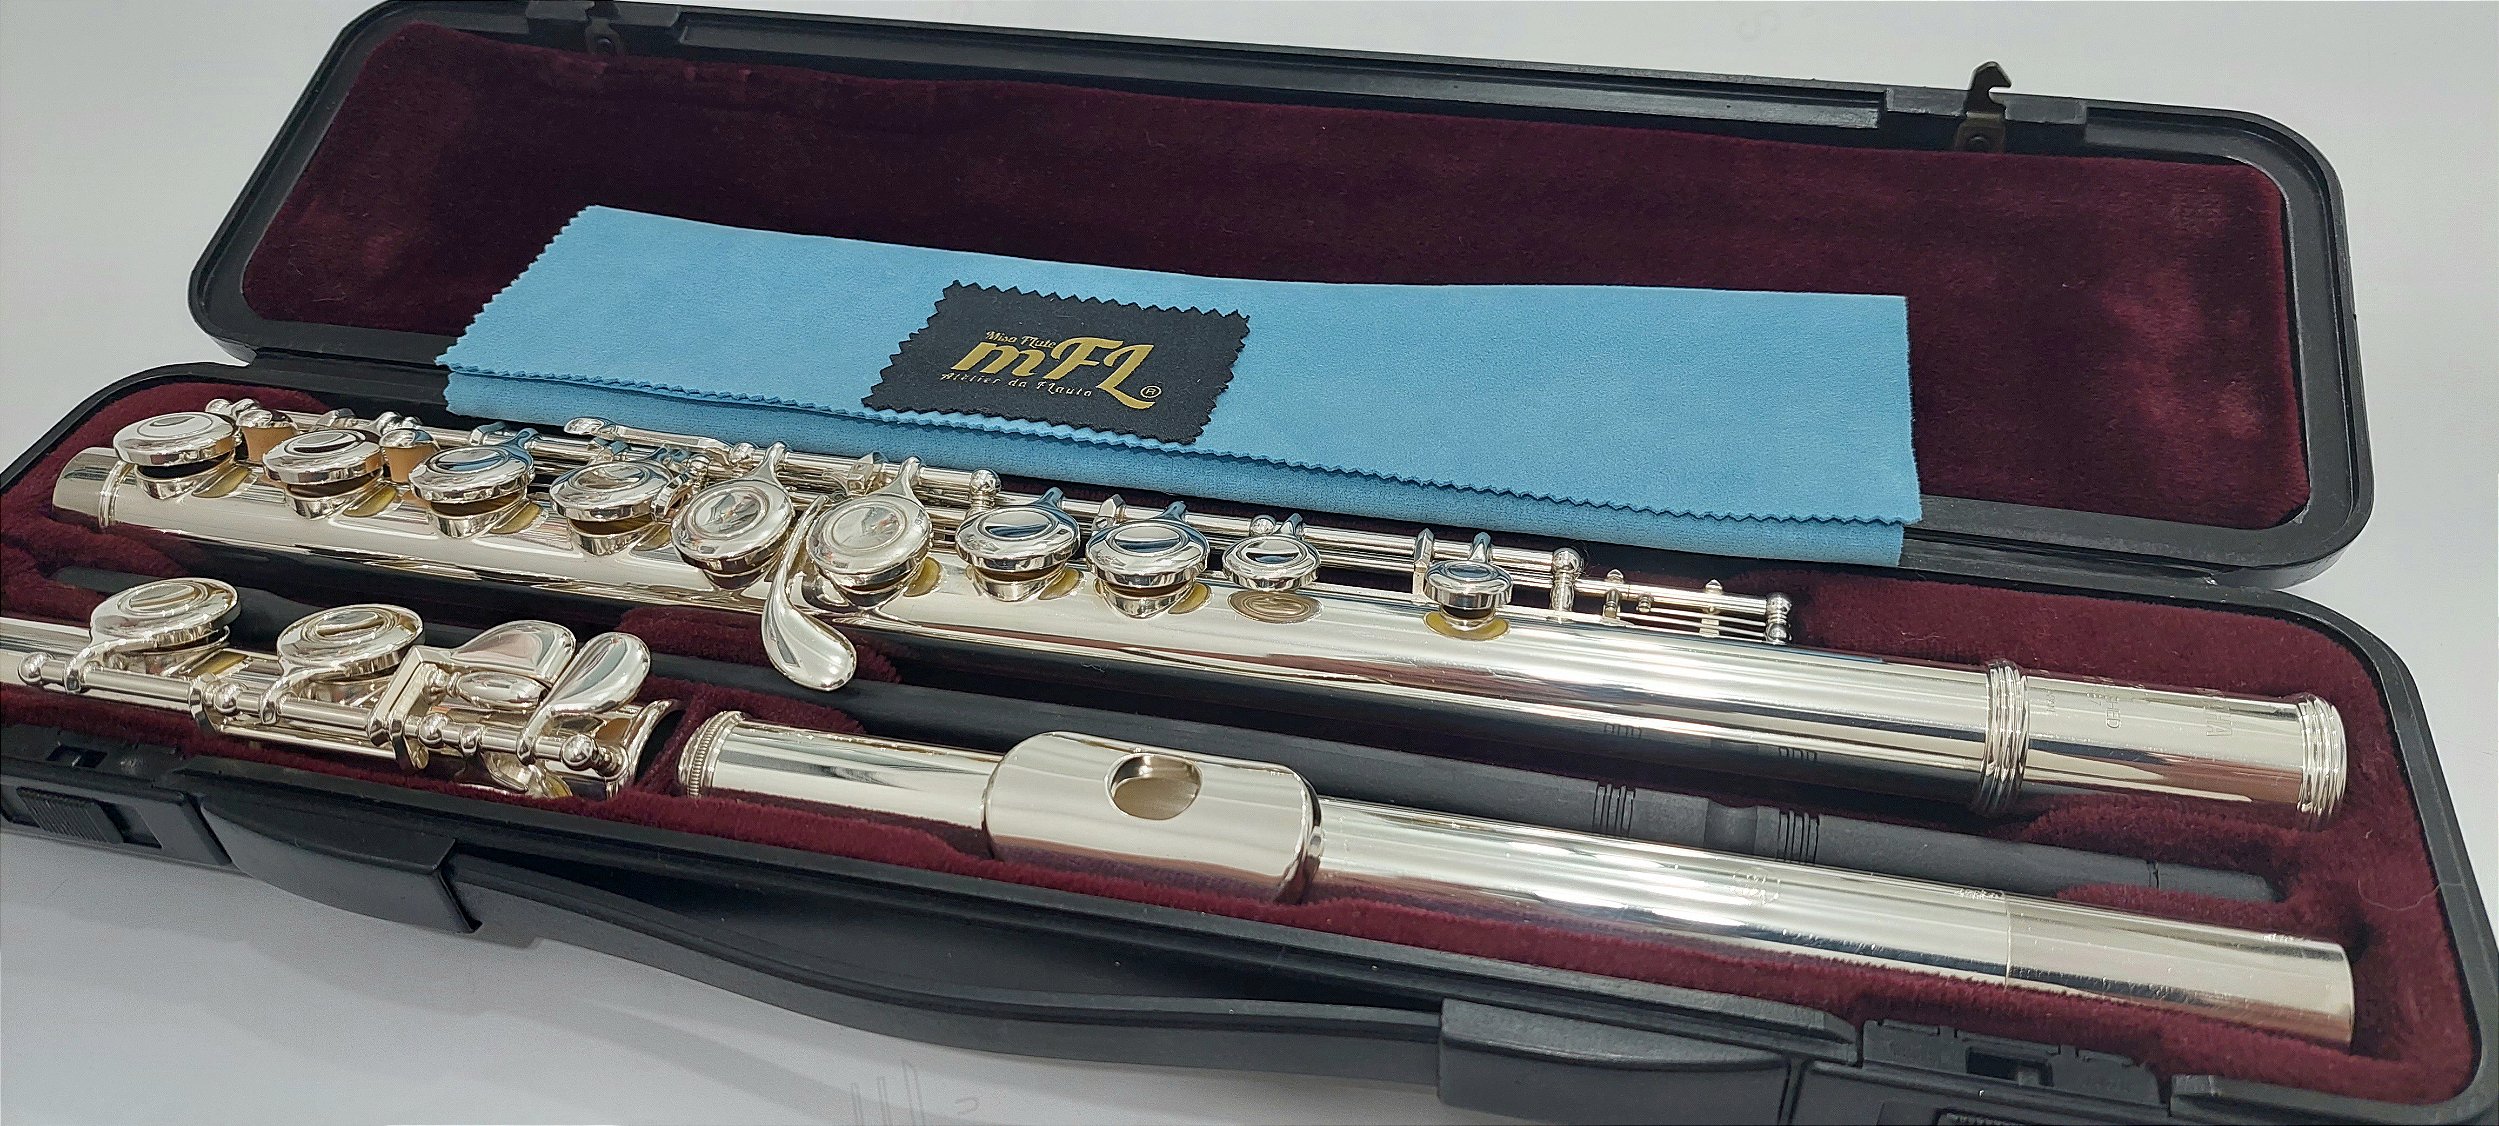 Flauta Yamaha 211 Japan ORIGINAL - Atelier mFL